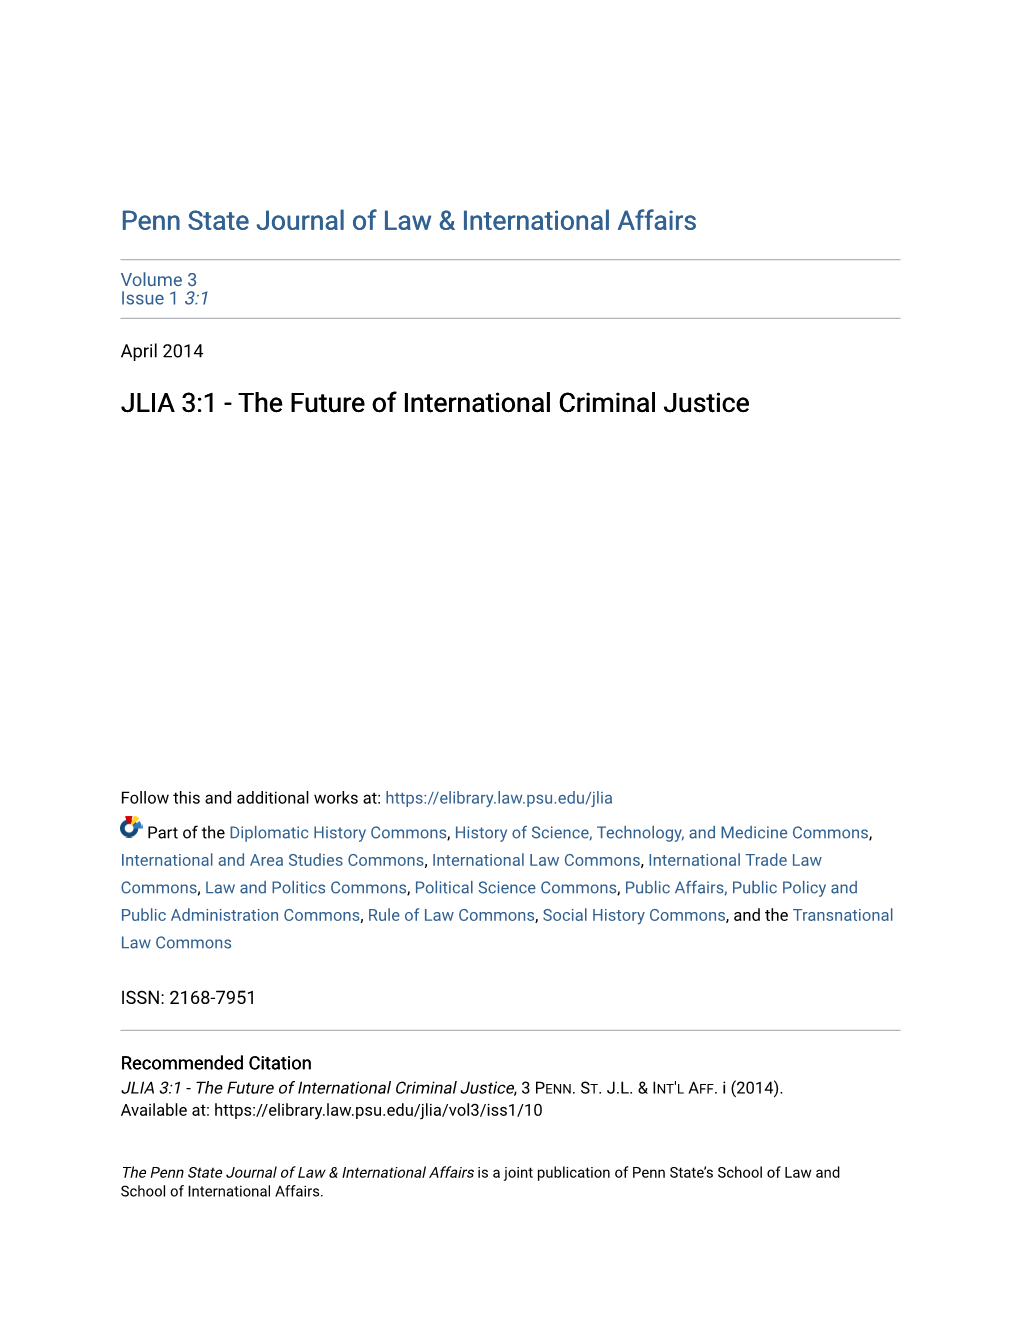 JLIA 3:1 - the Future of International Criminal Justice